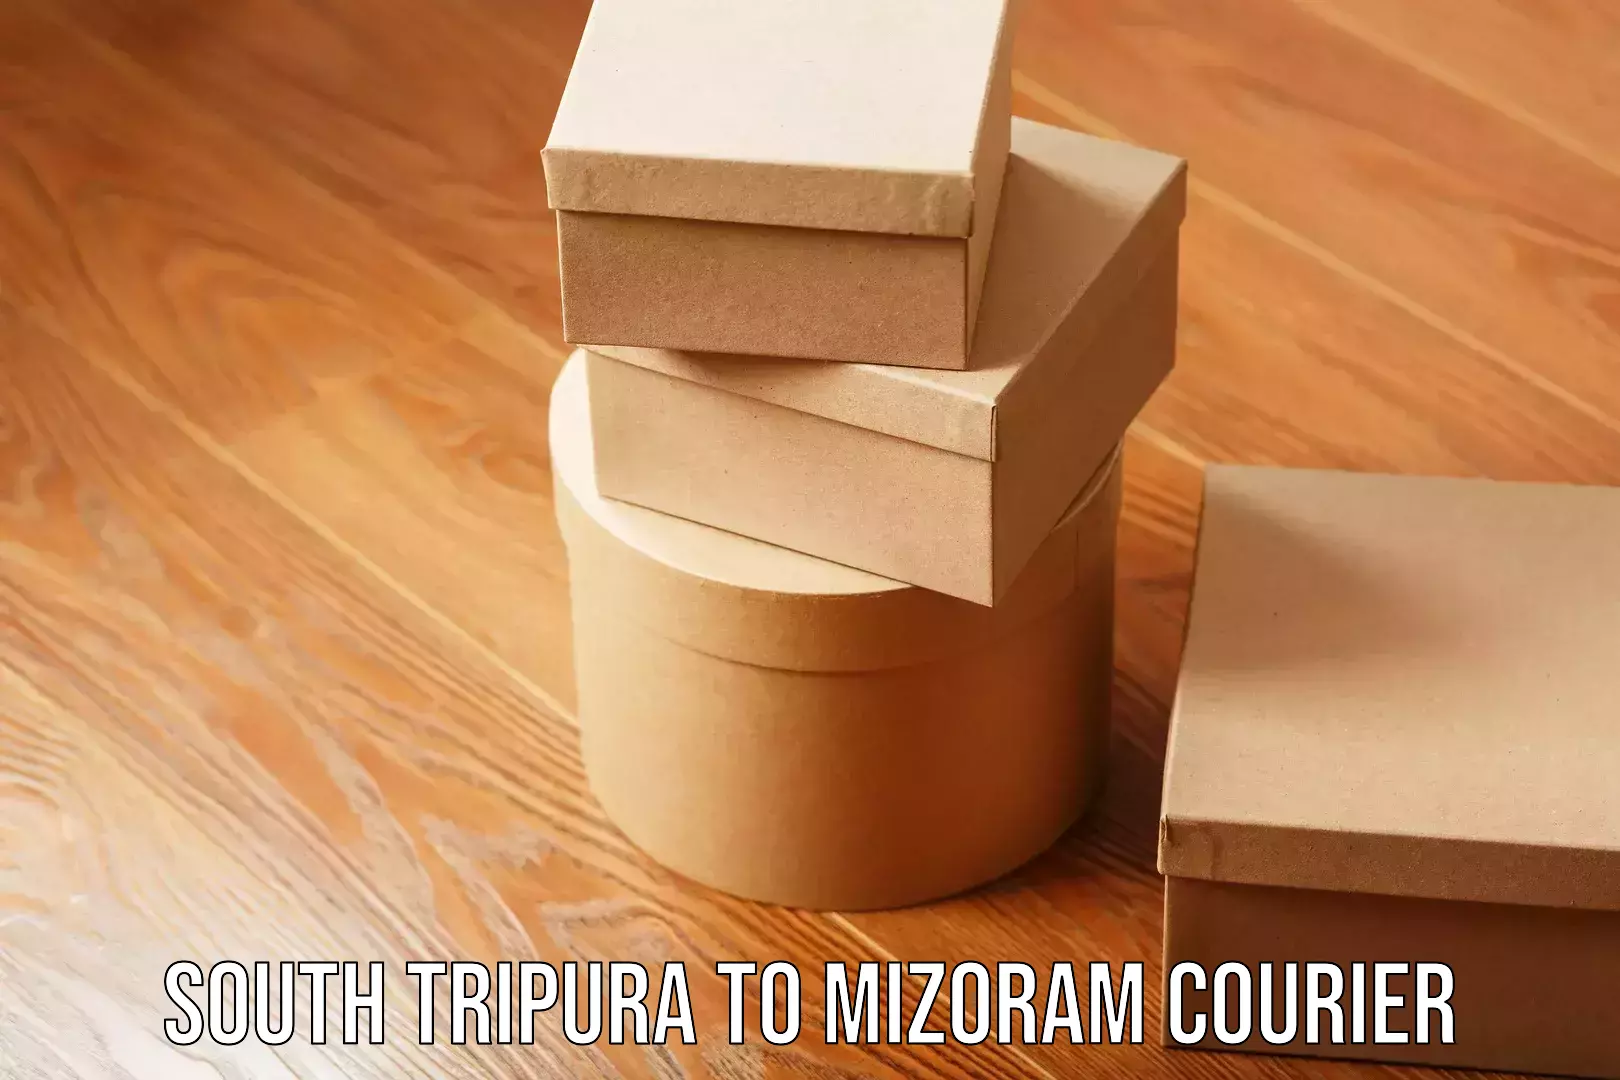 Nationwide courier service South Tripura to Mizoram